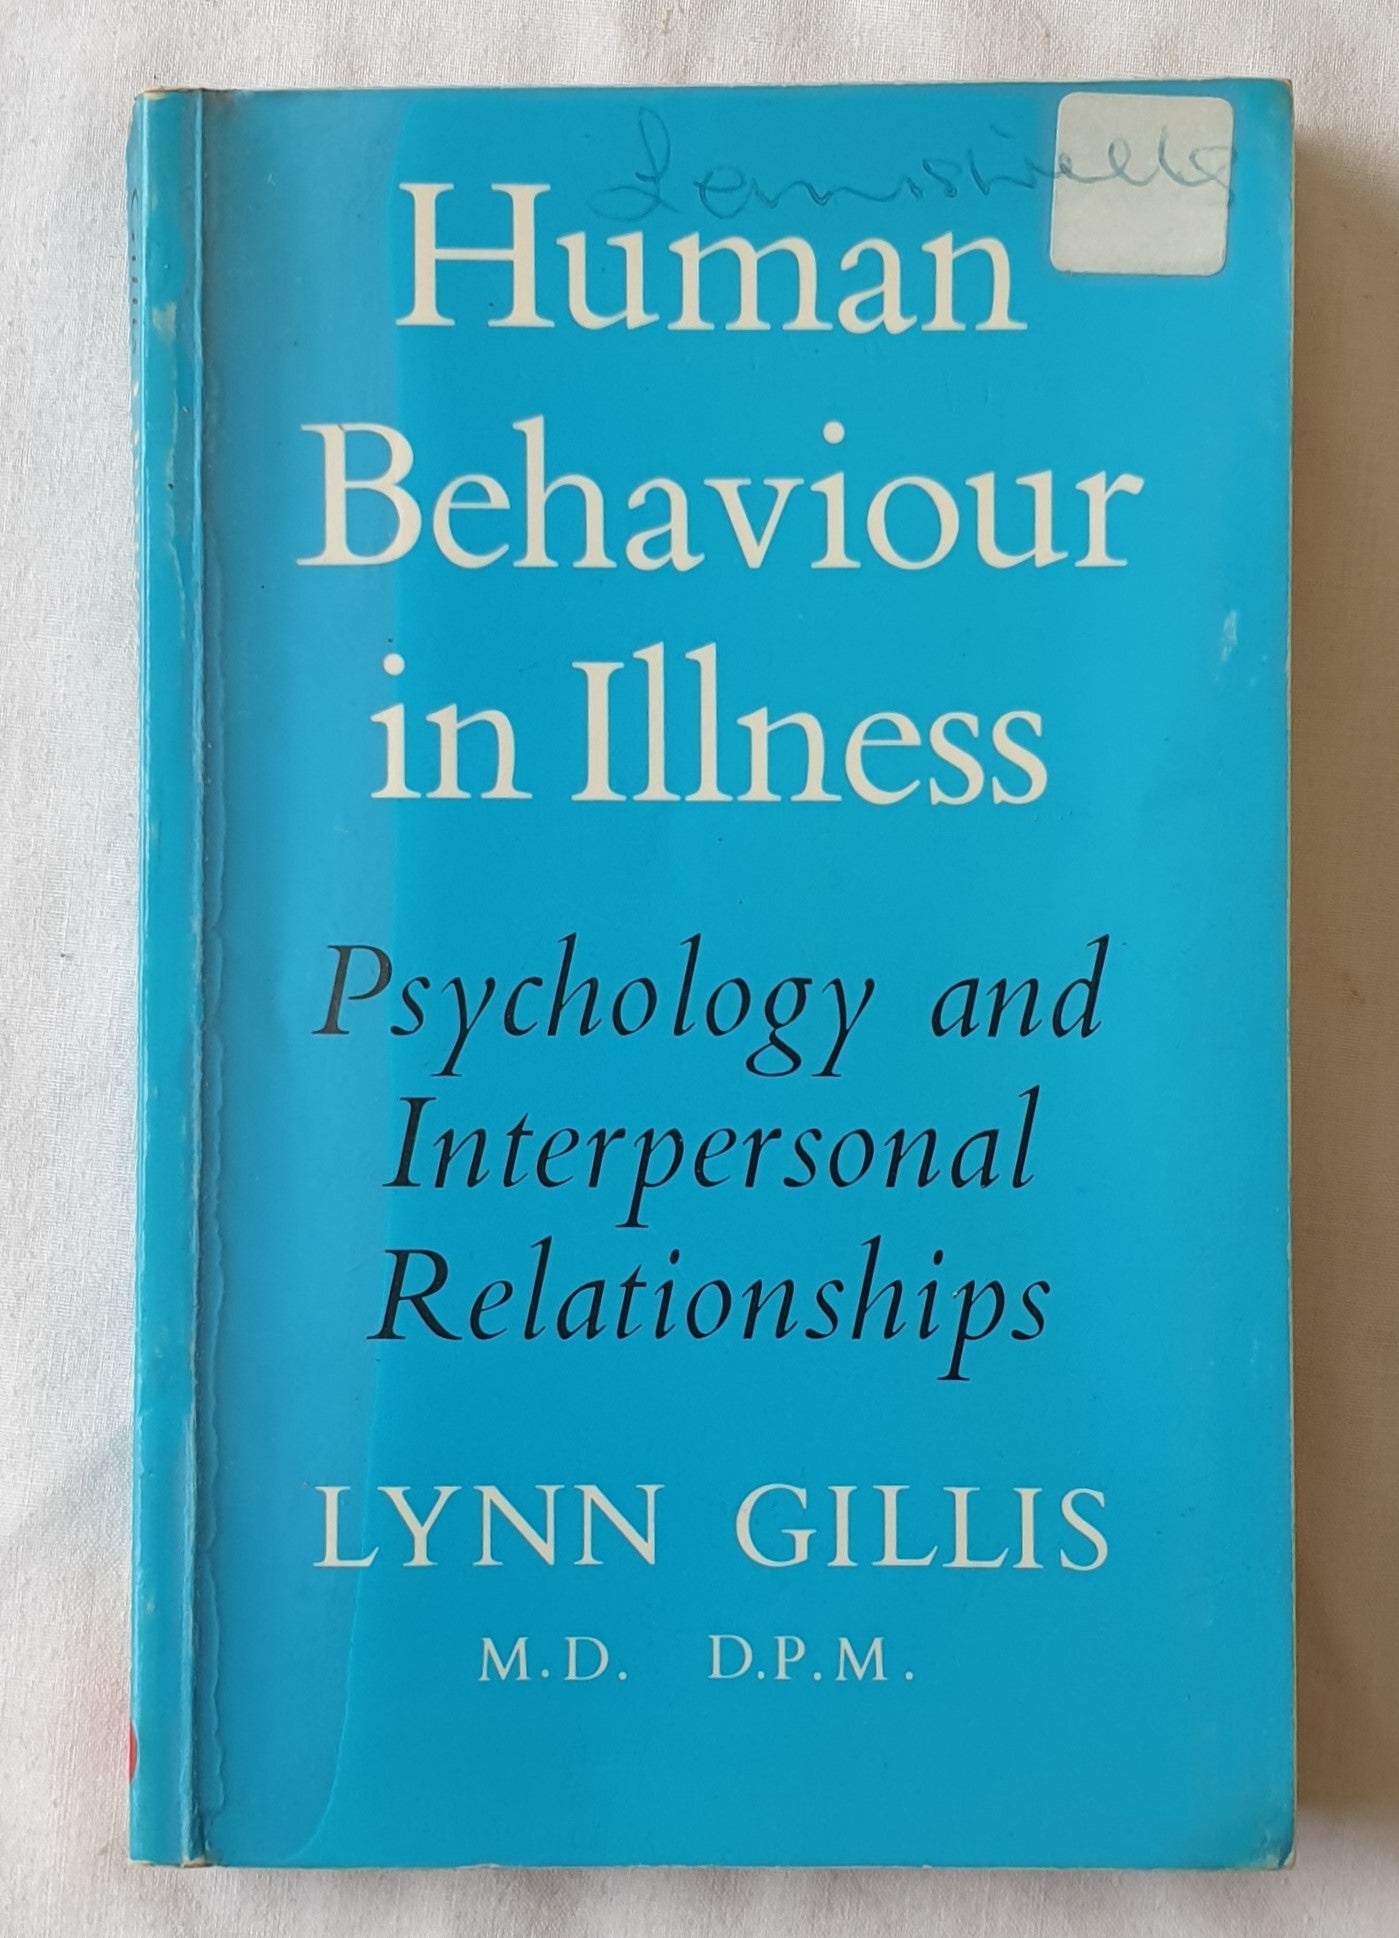 Human Behaviour in Illness by Lynn Gillis